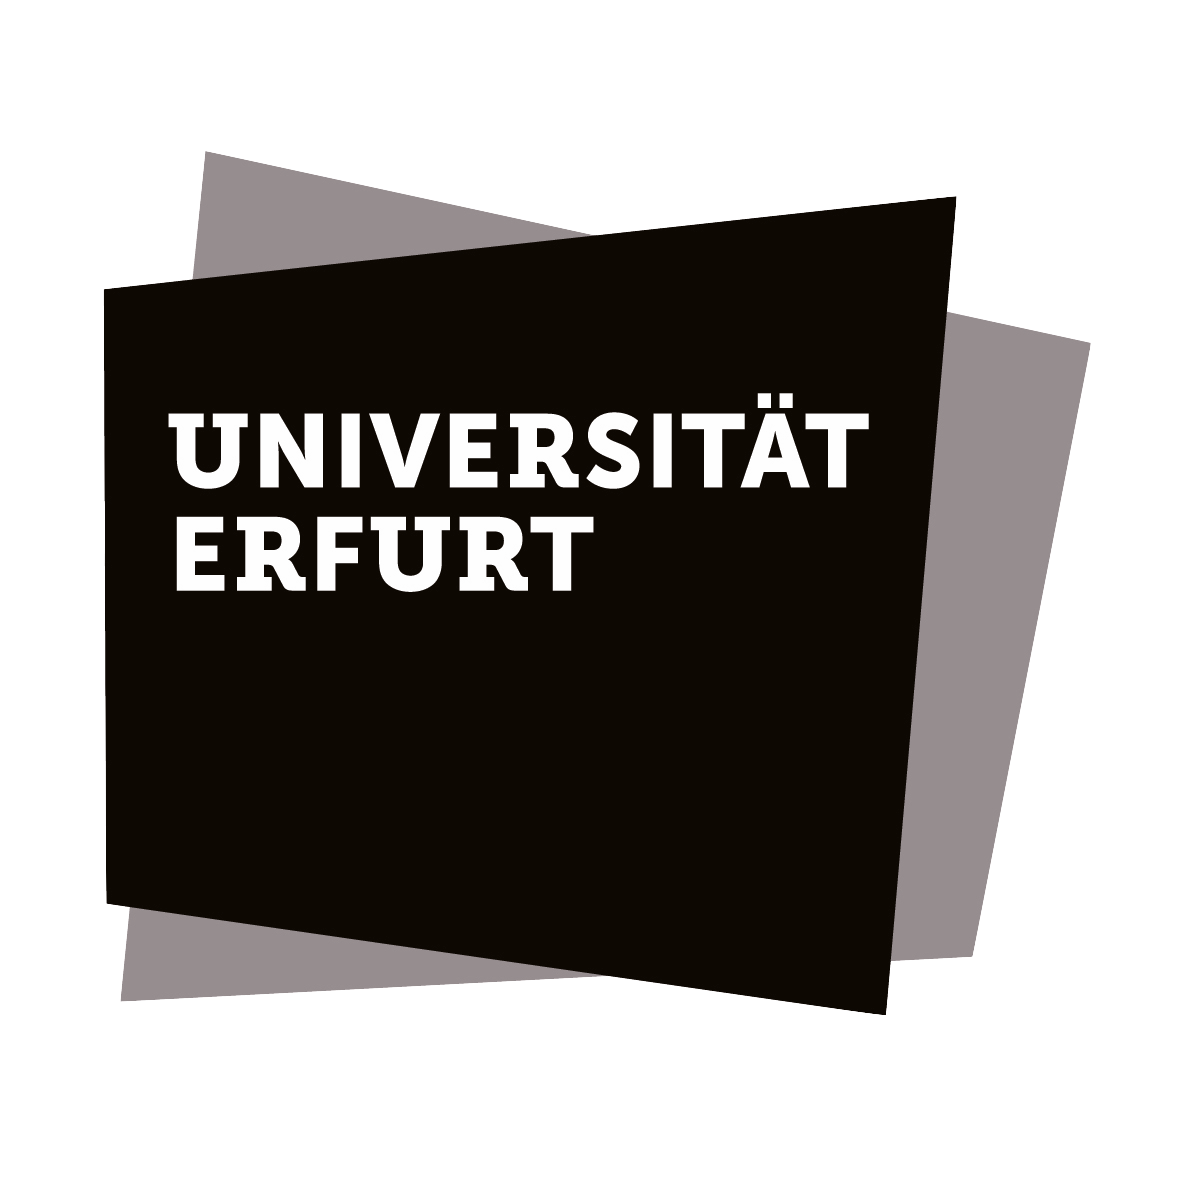 Universität erfurt logo